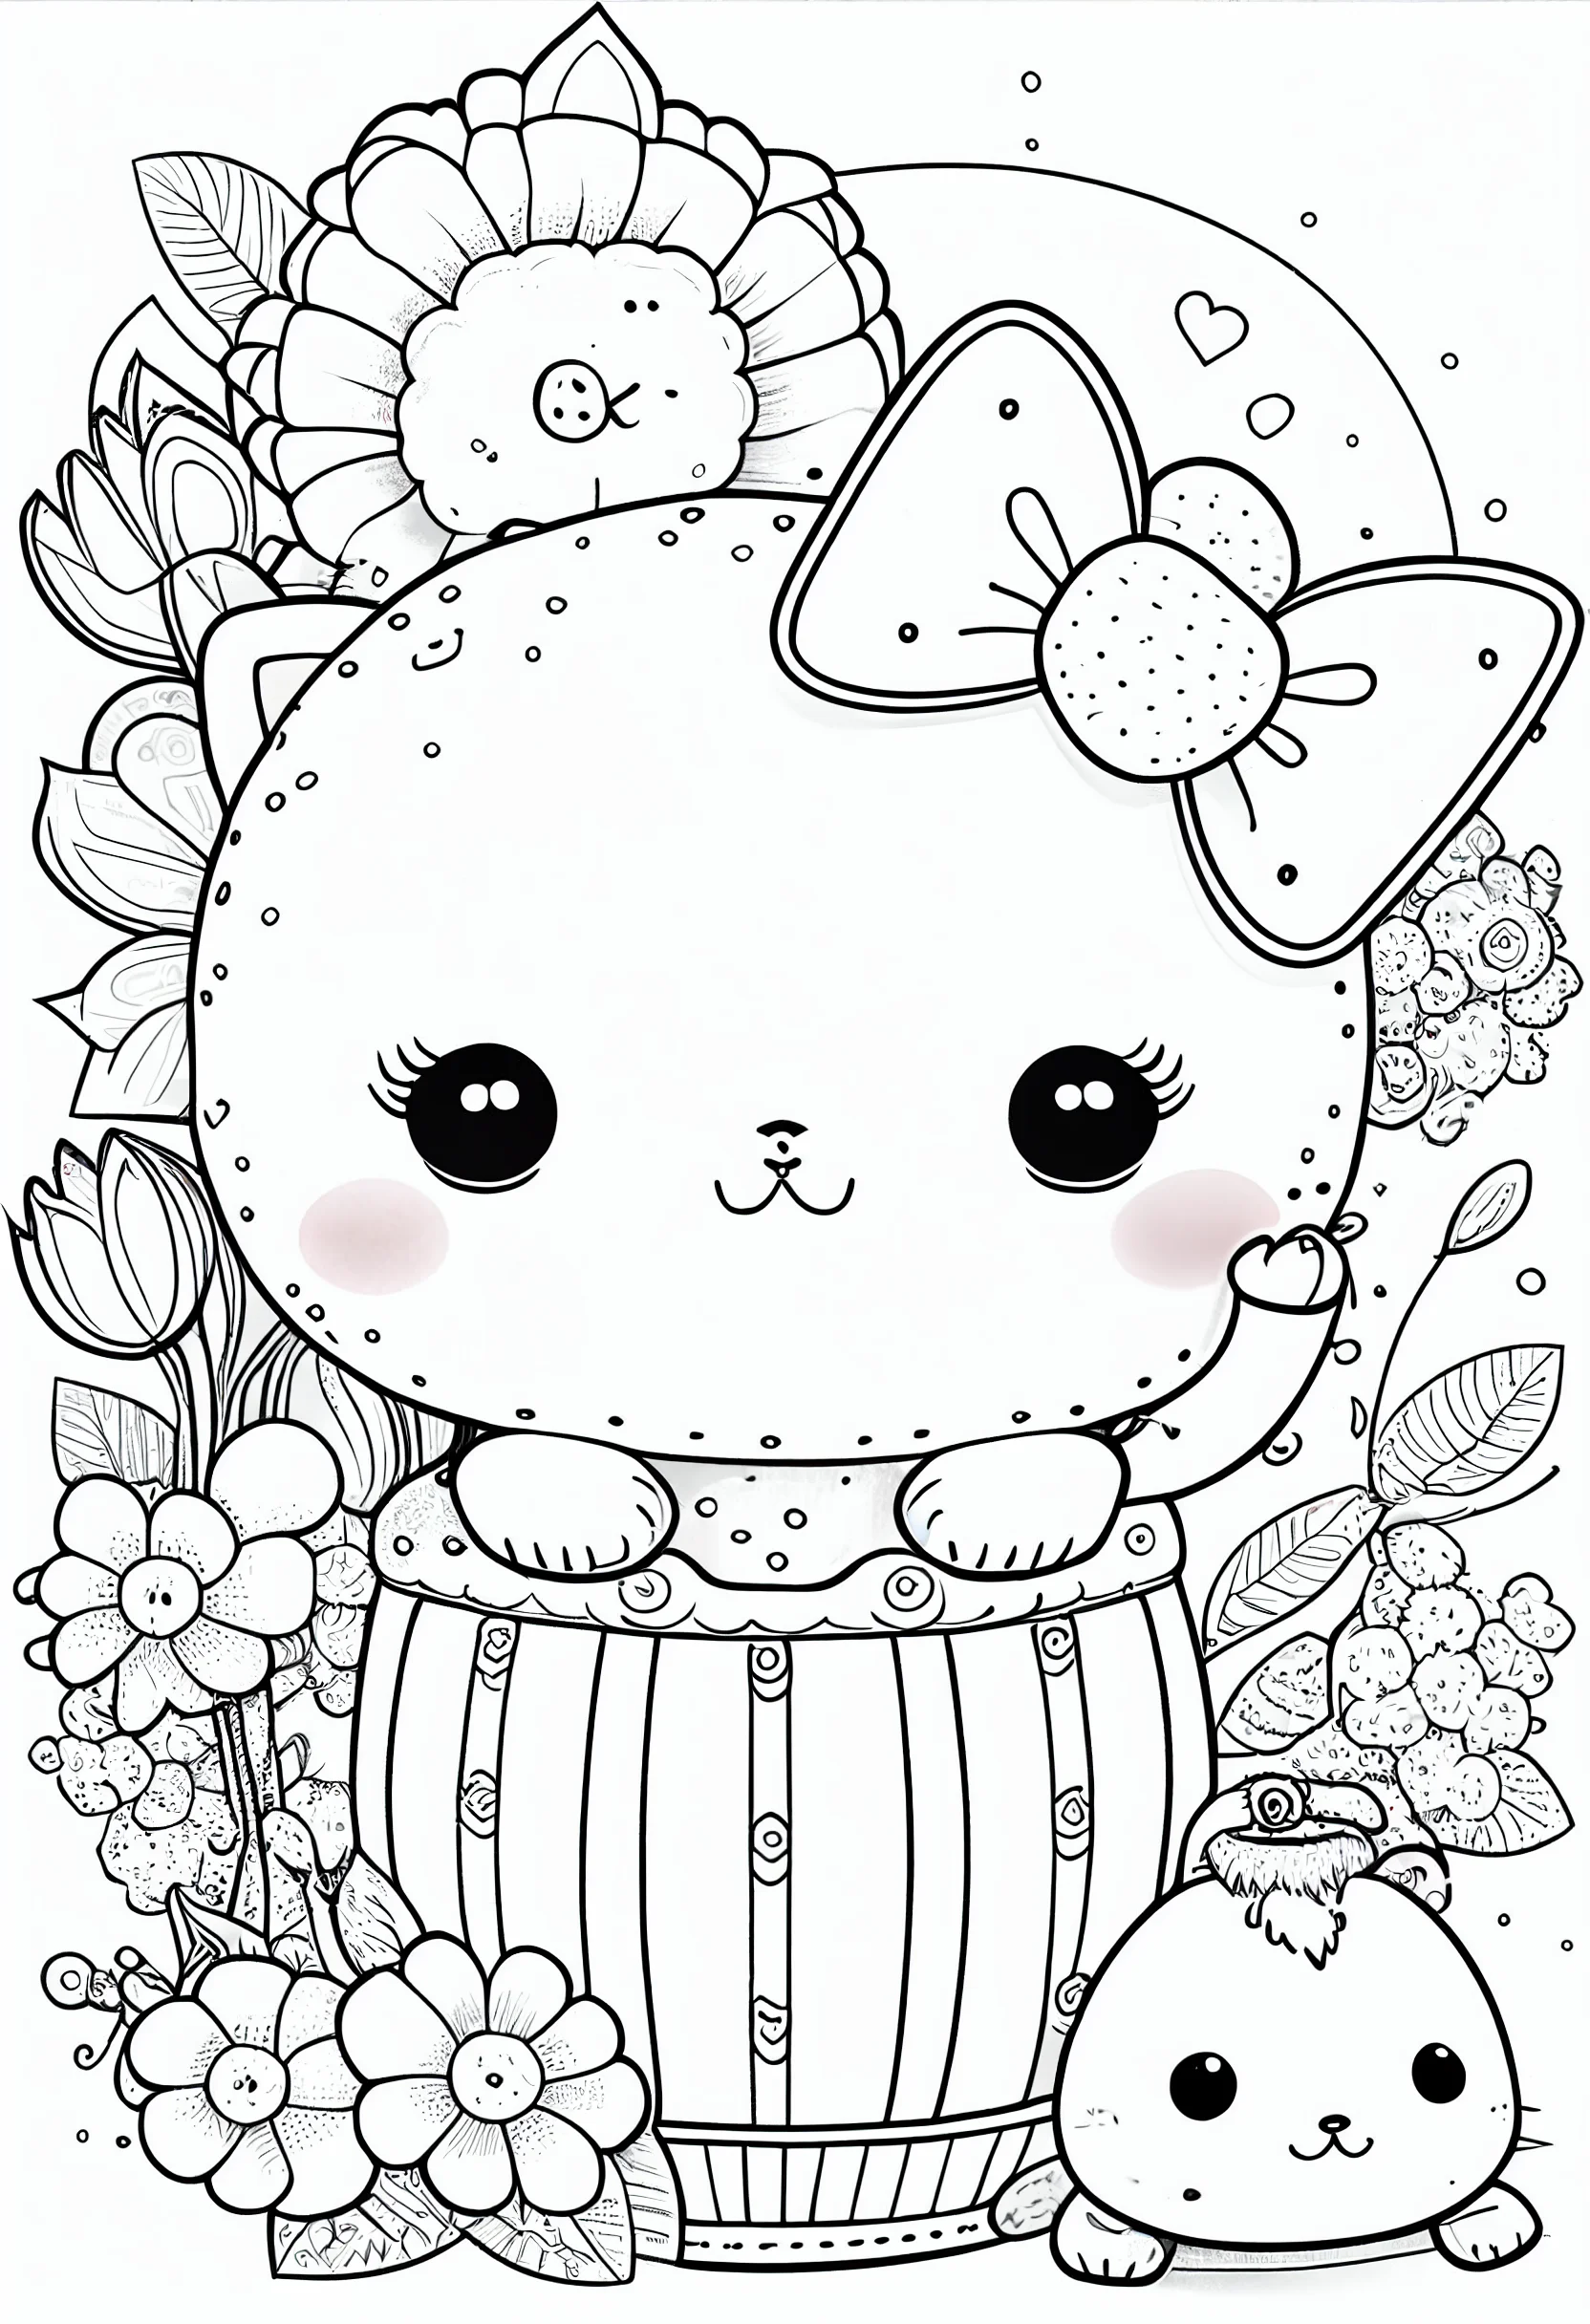 Printable kawaii cute coloring pages